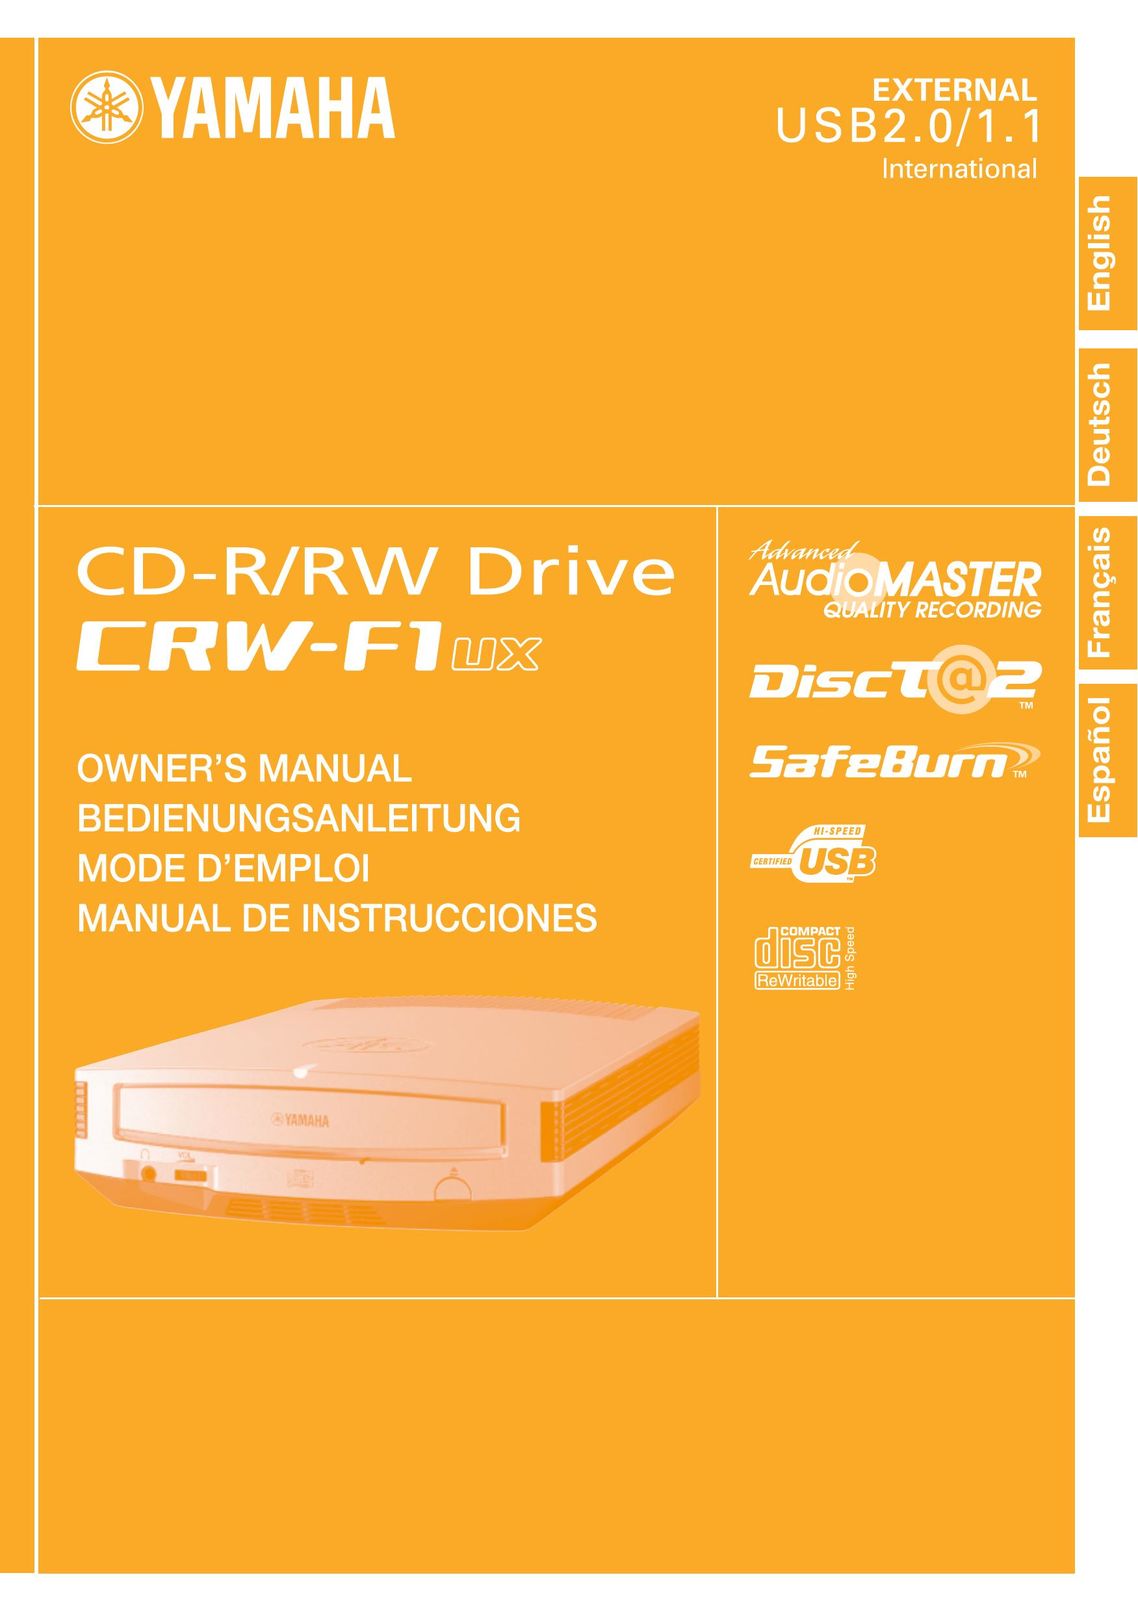 Yamaha CRW-F1UX Network Card User Manual